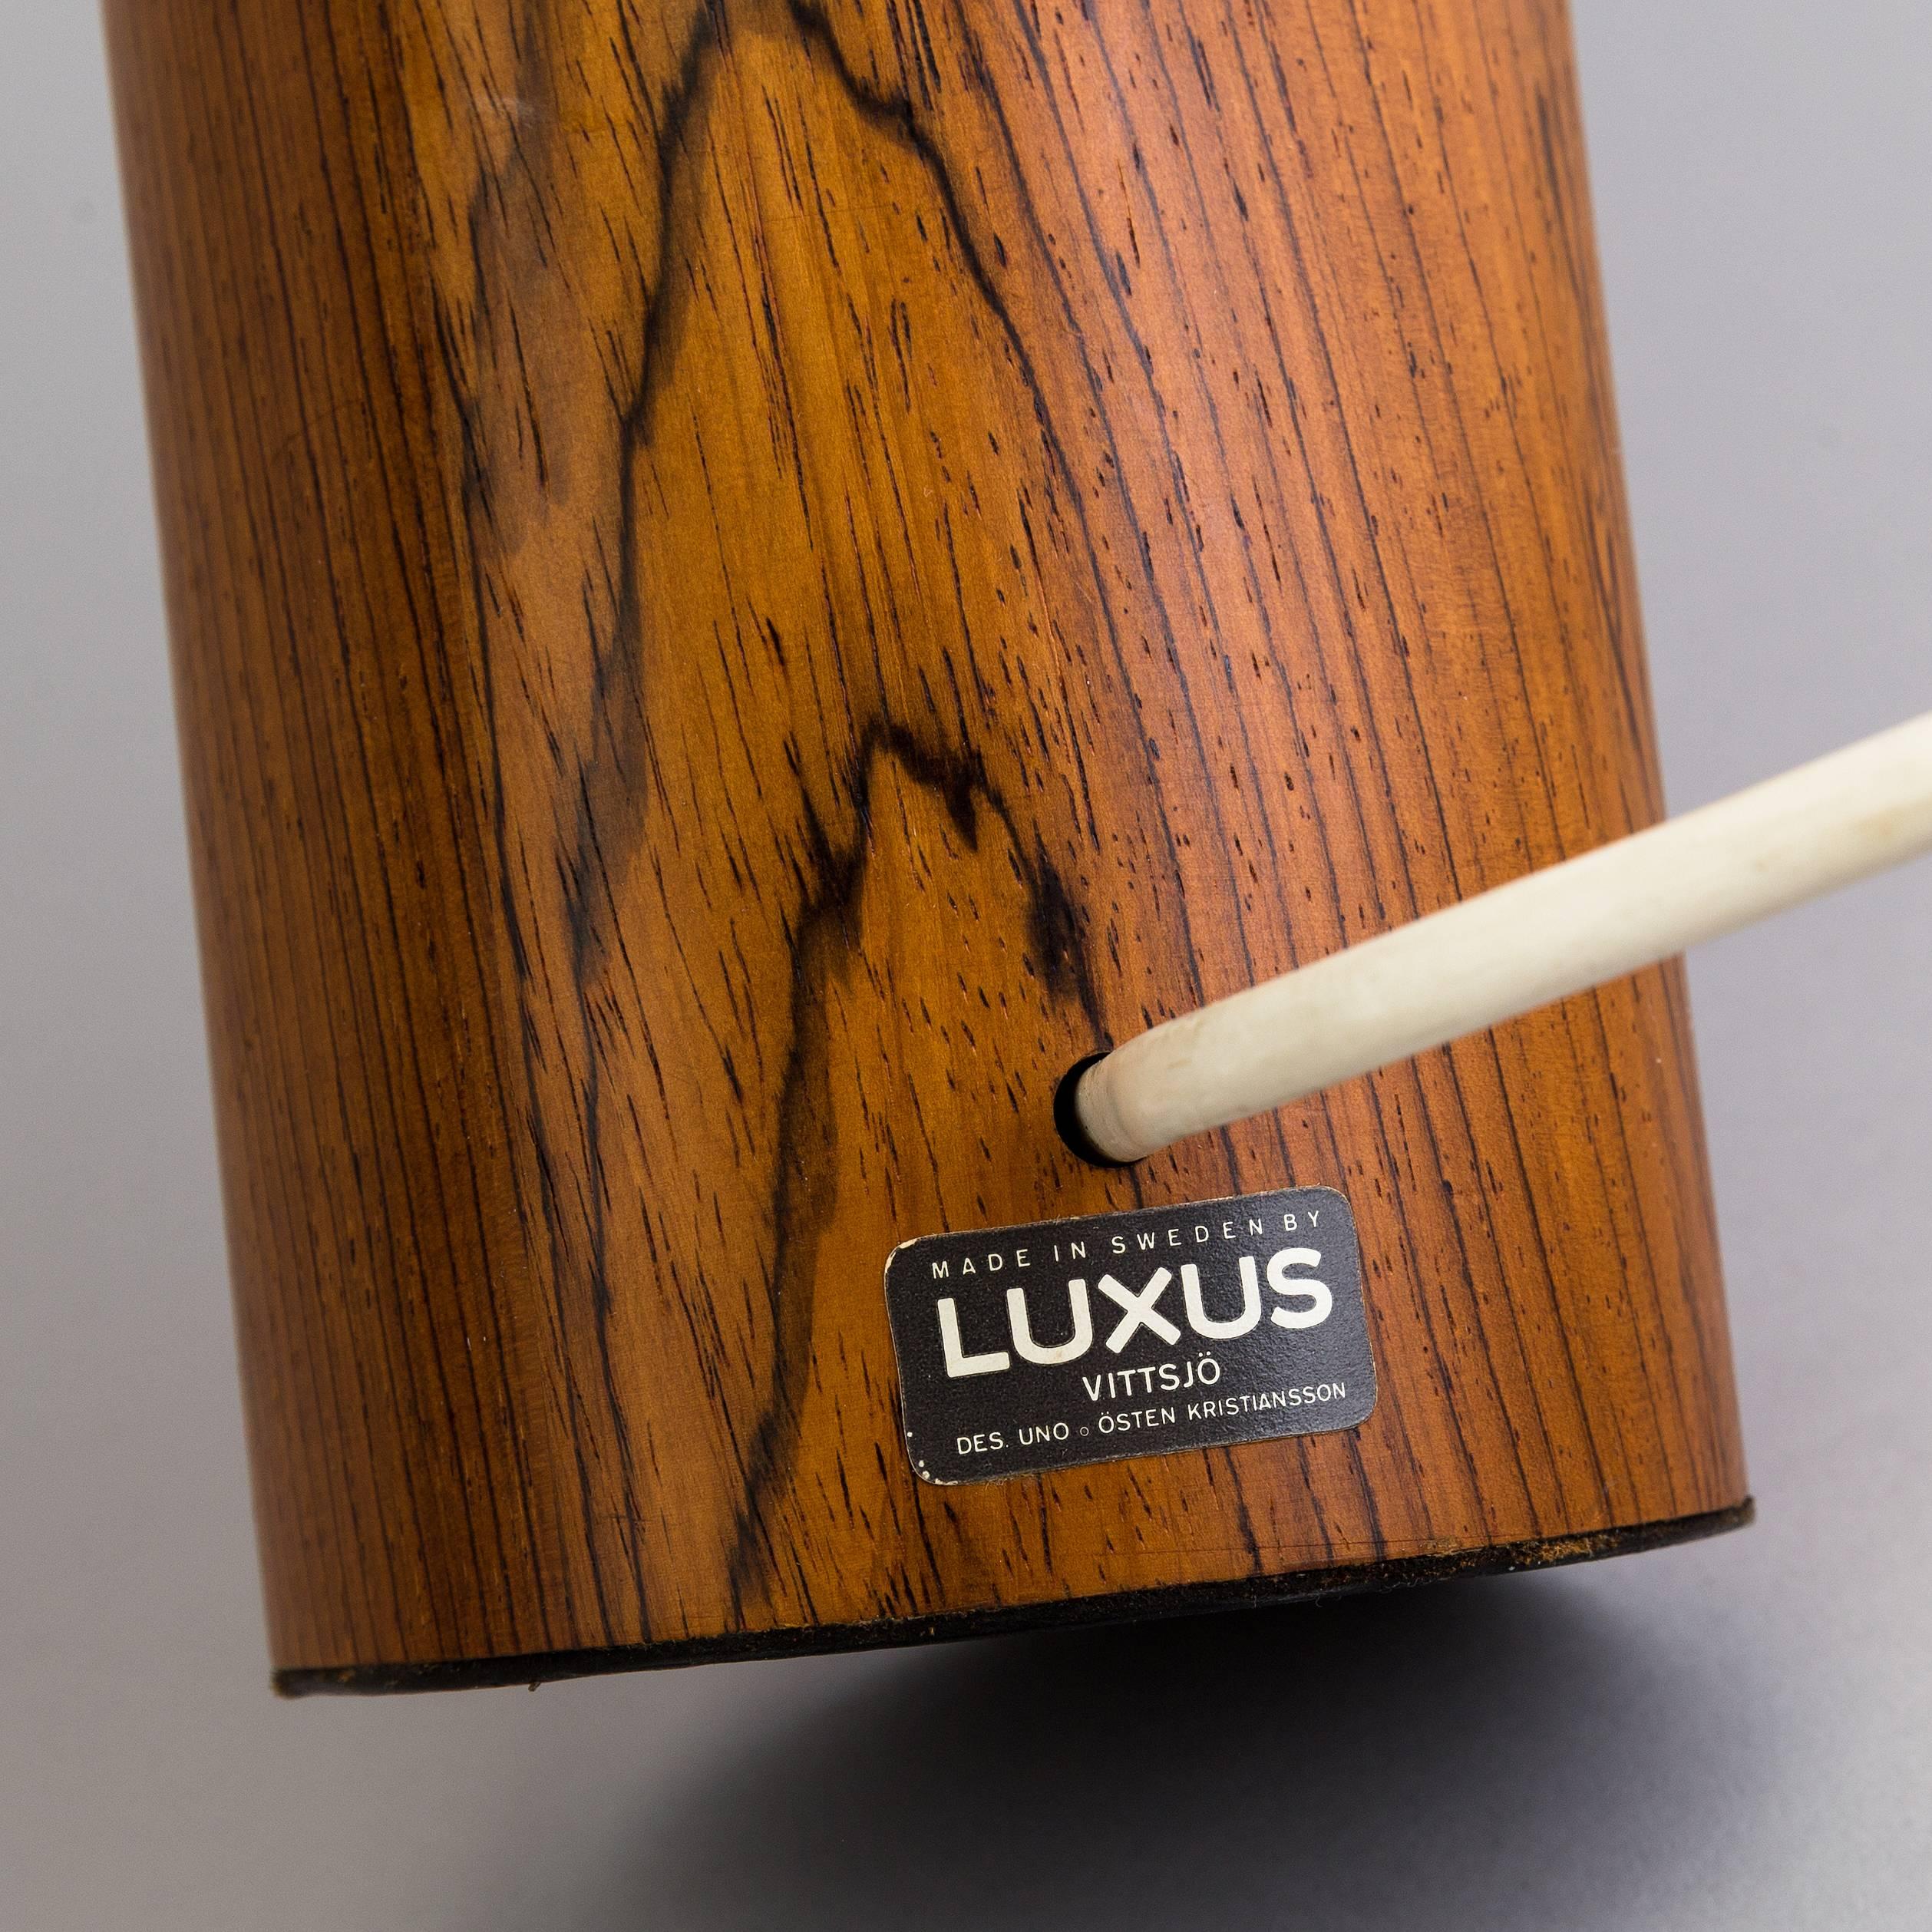 Scandinavian Modern Rosewood Scandinavian Table Lamps by Uno & Osten Kristiansson for Luxus